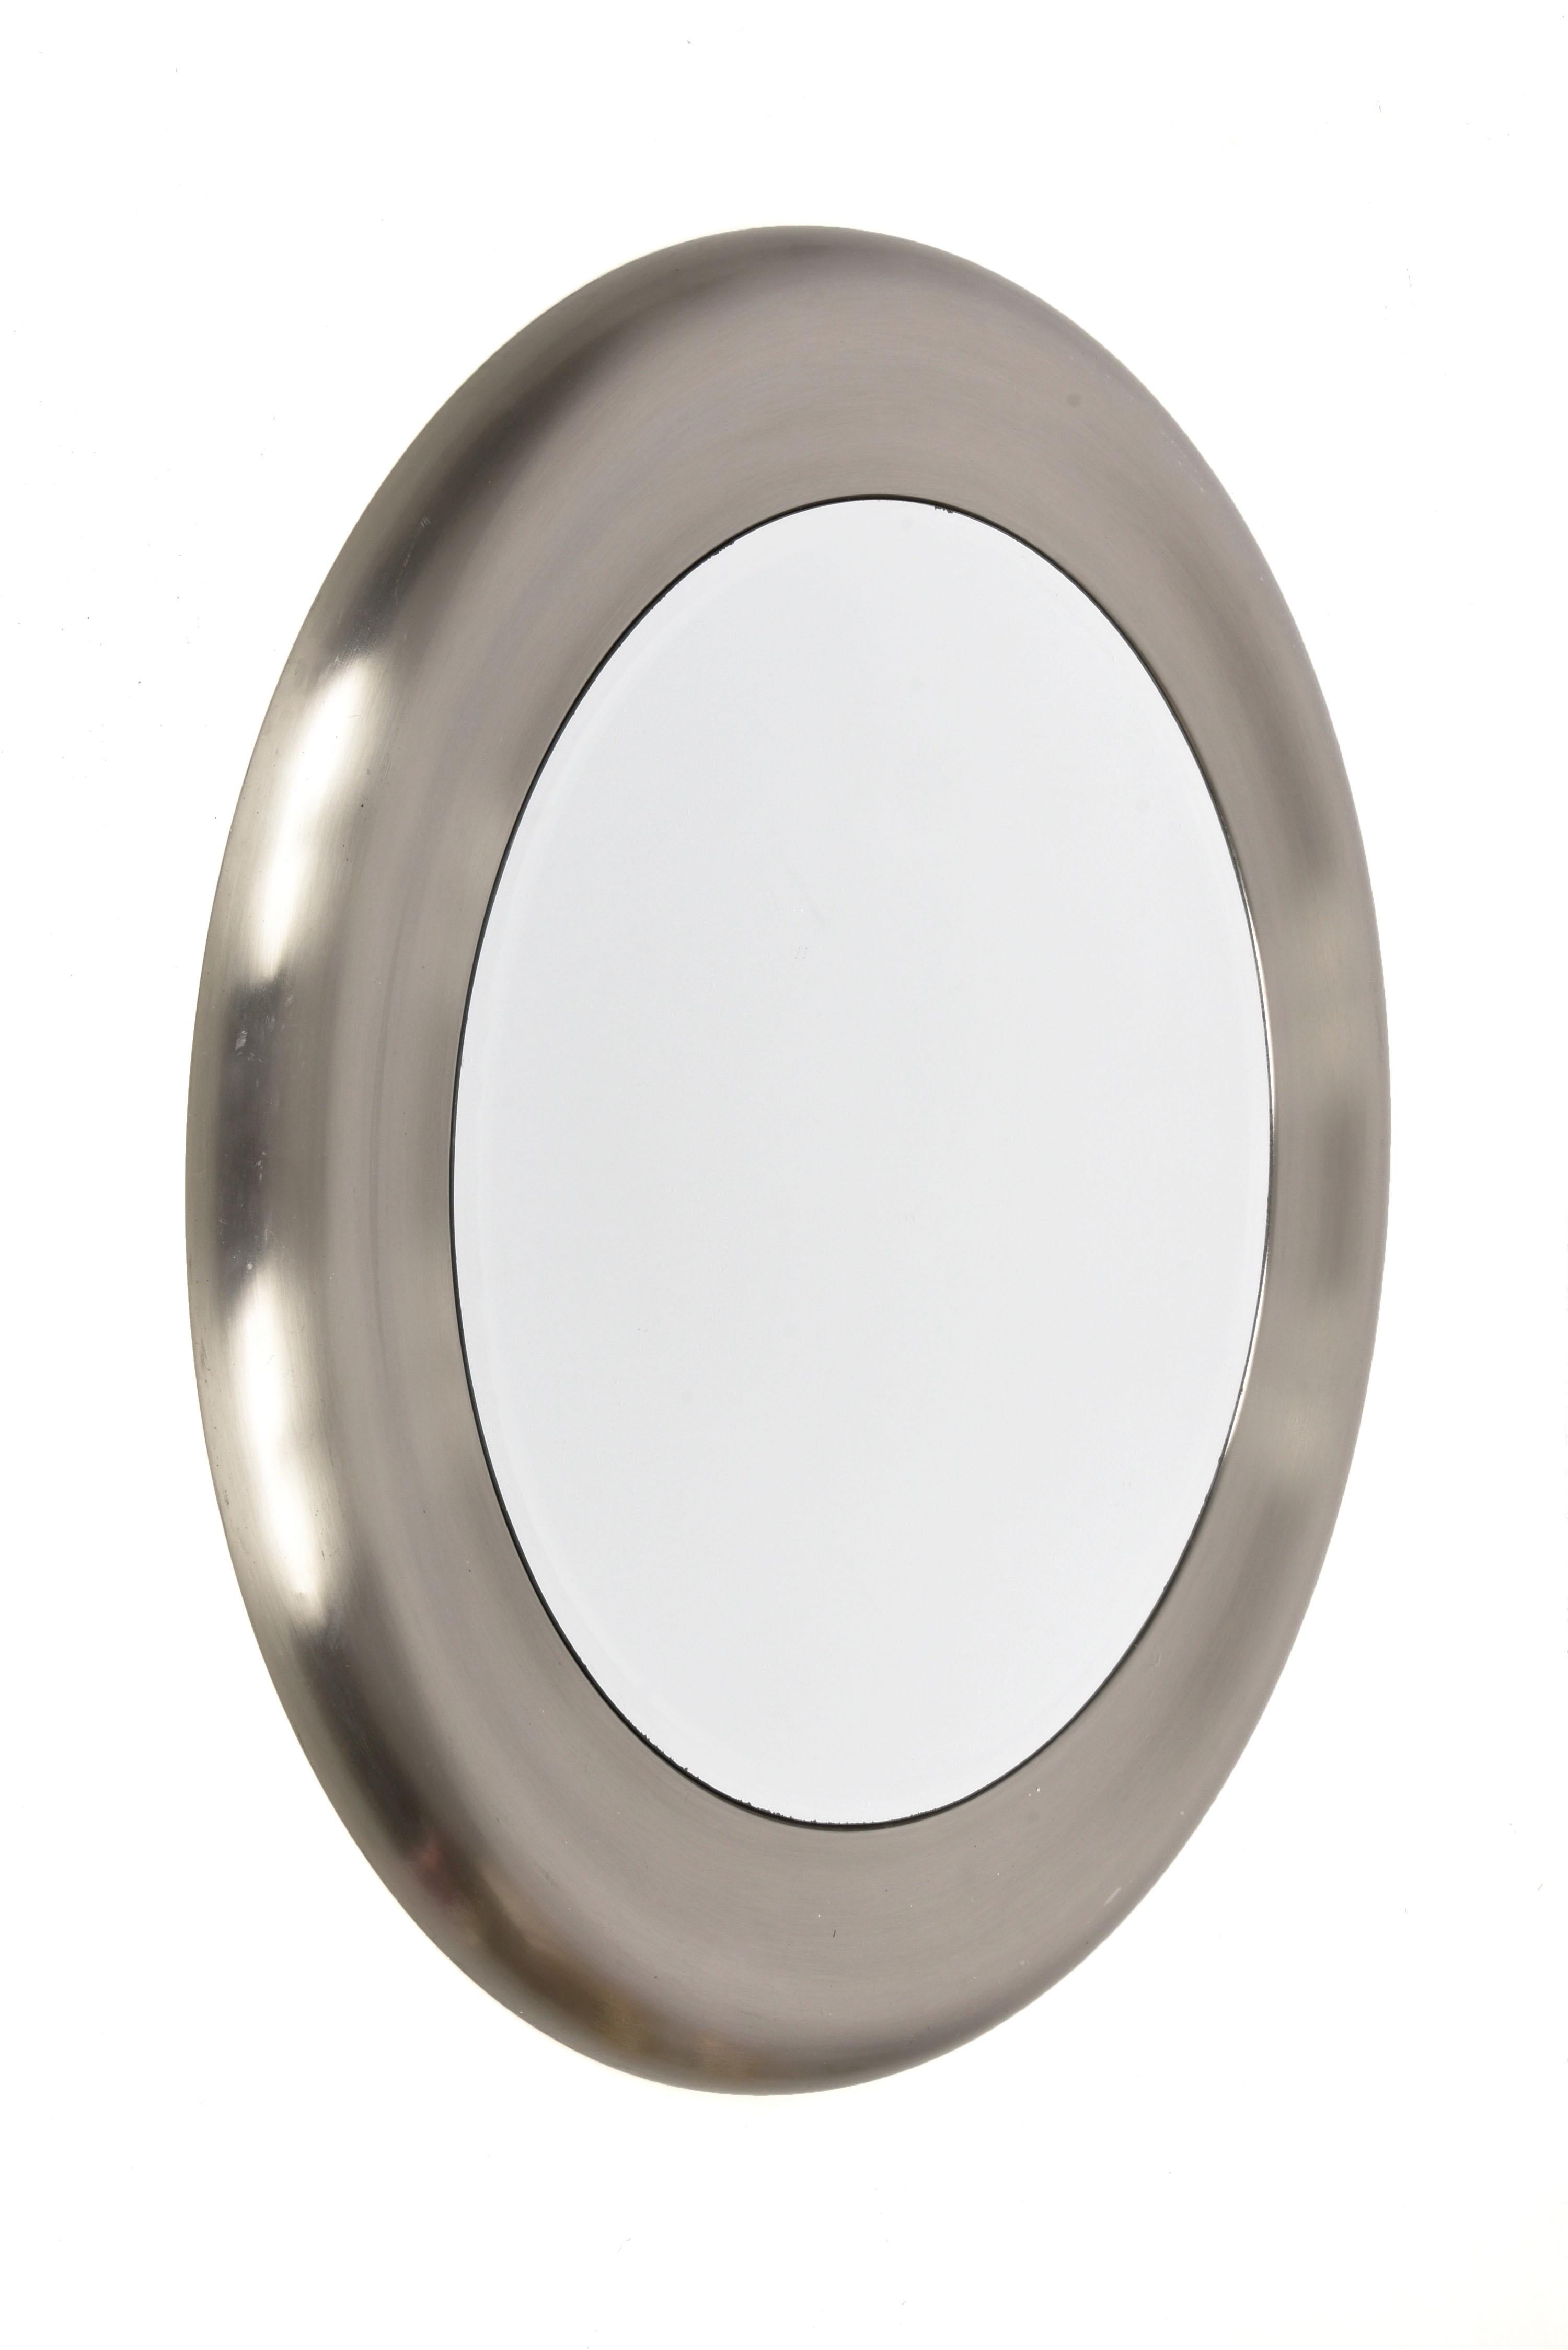 Mid-Century Modern Midcentury Reggiani Italian Round Steel and Bevelled Wall Mirror, 1960s For Sale